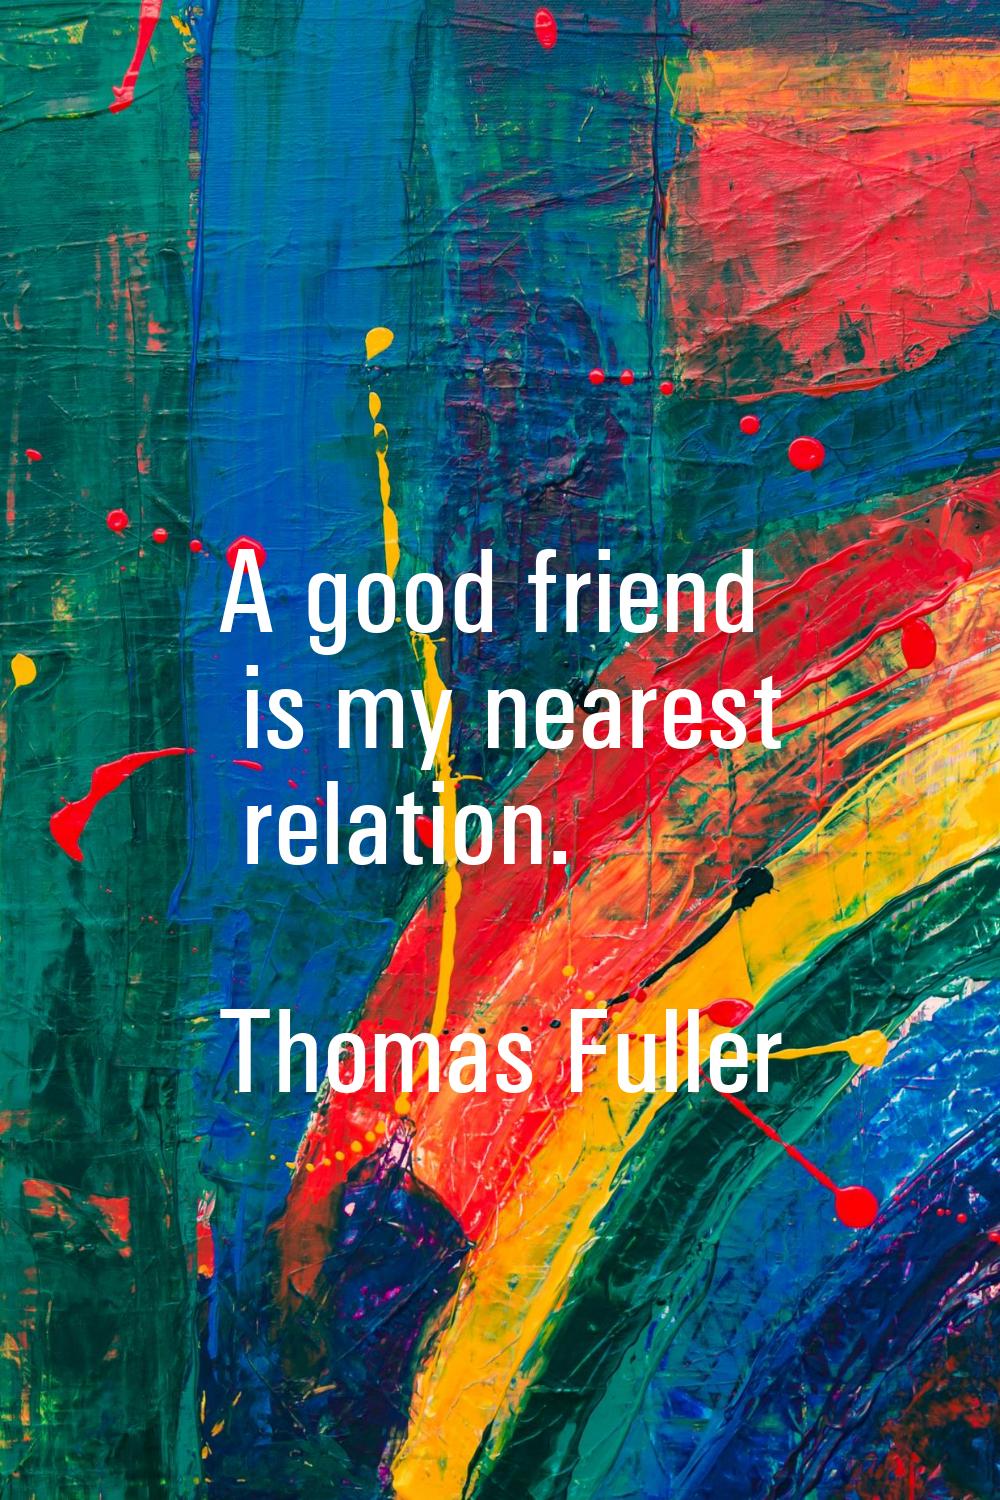 A good friend is my nearest relation.